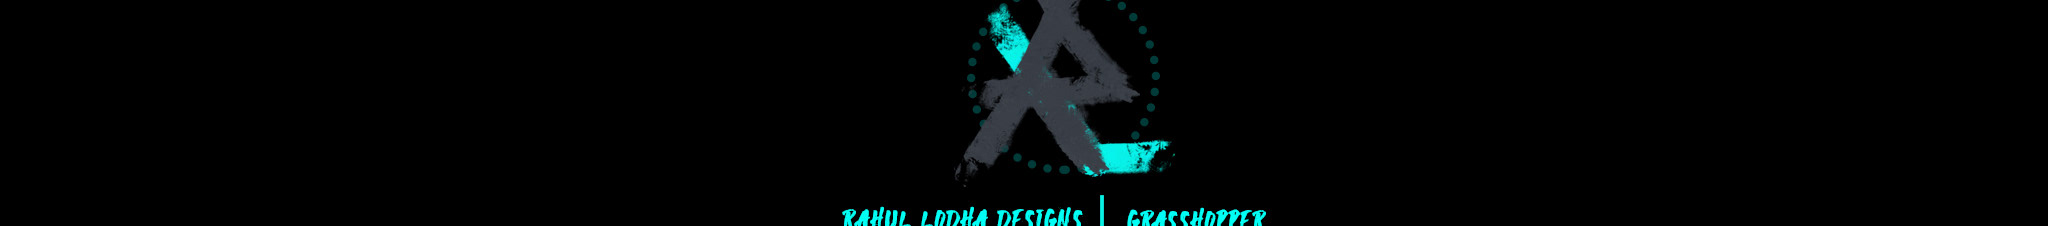 Rahul lodha's profile banner